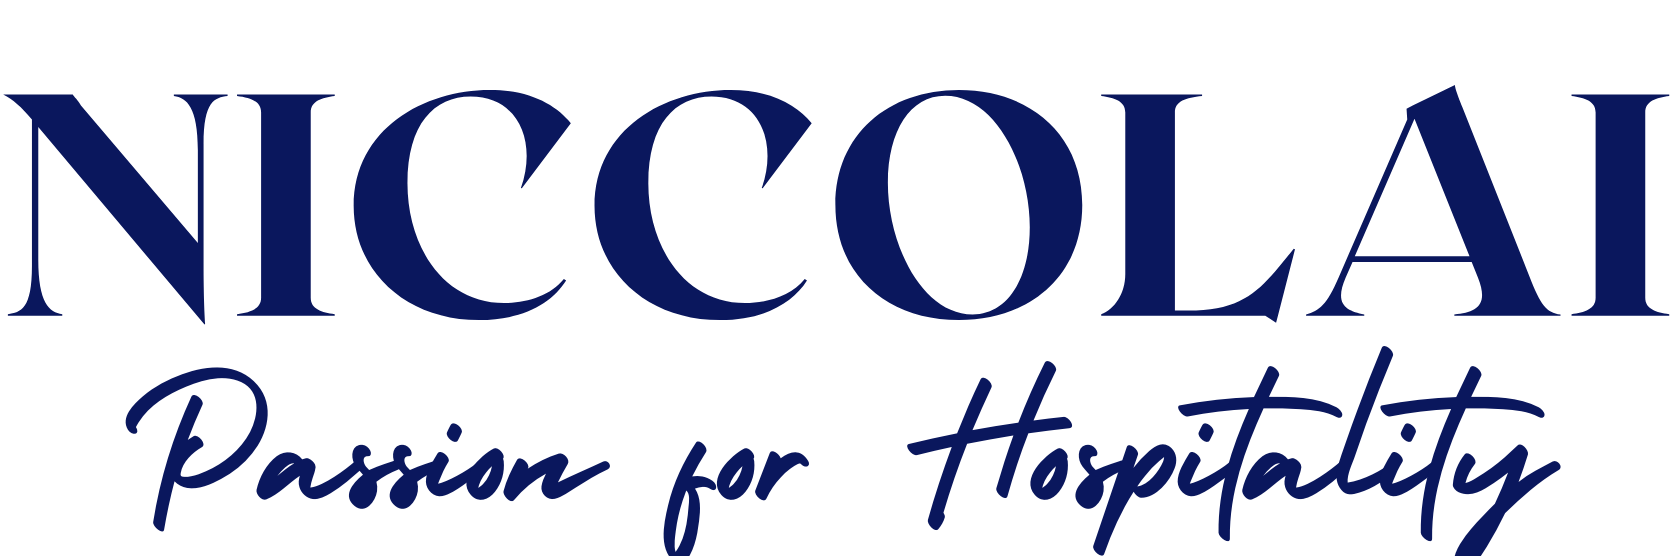 Niccolai Imports Logo